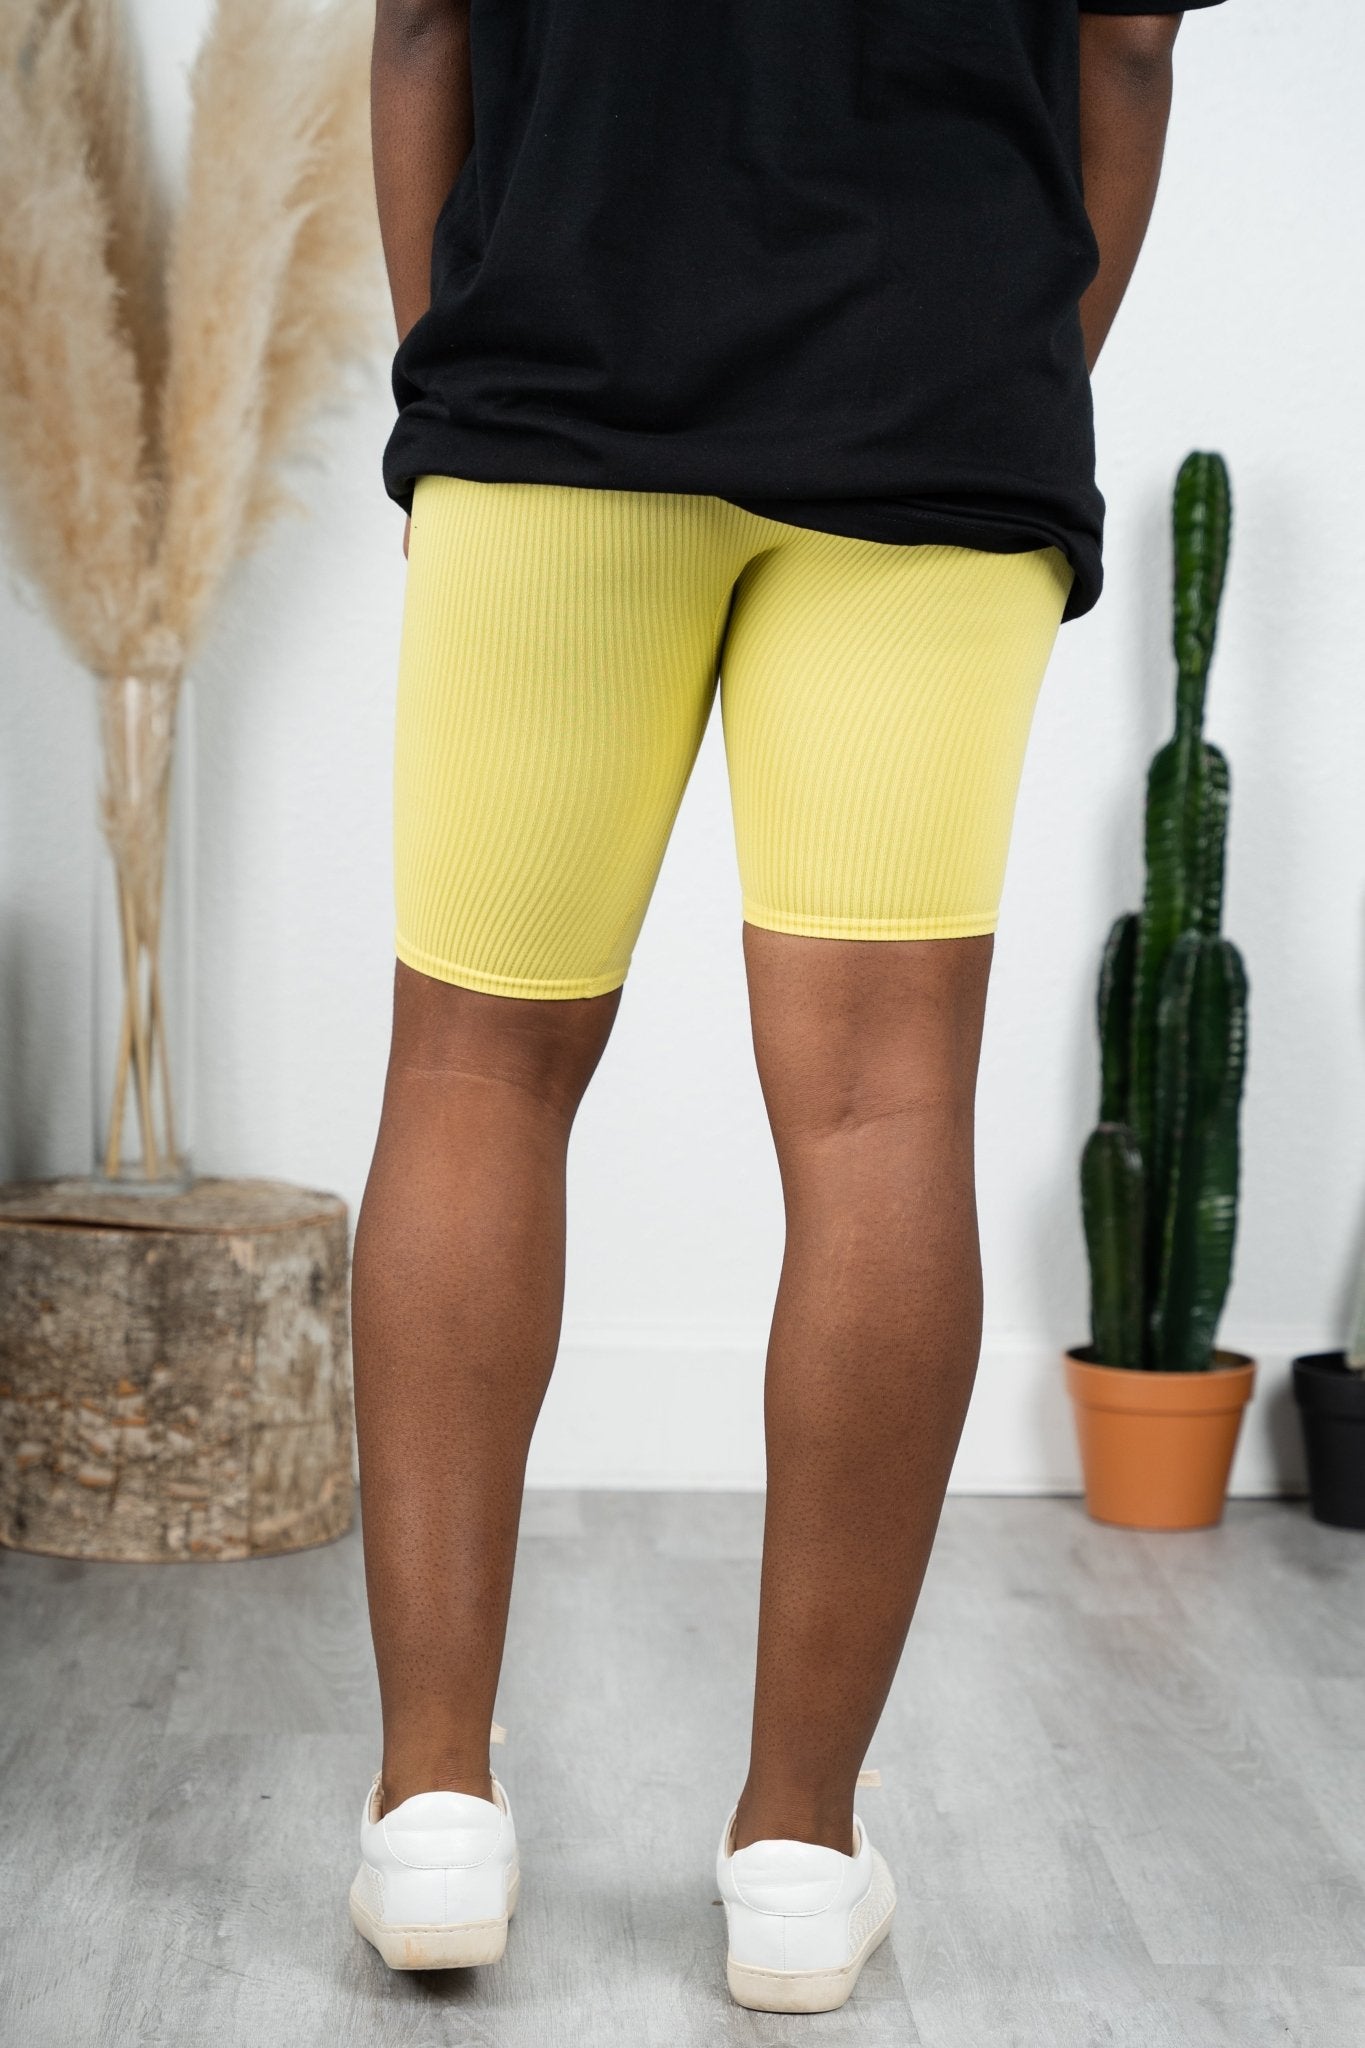 Ribbed seamless biker shorts yellow Stylish biker shorts - Womens Fashion Shorts at Lush Fashion Lounge Boutique in Oklahoma City